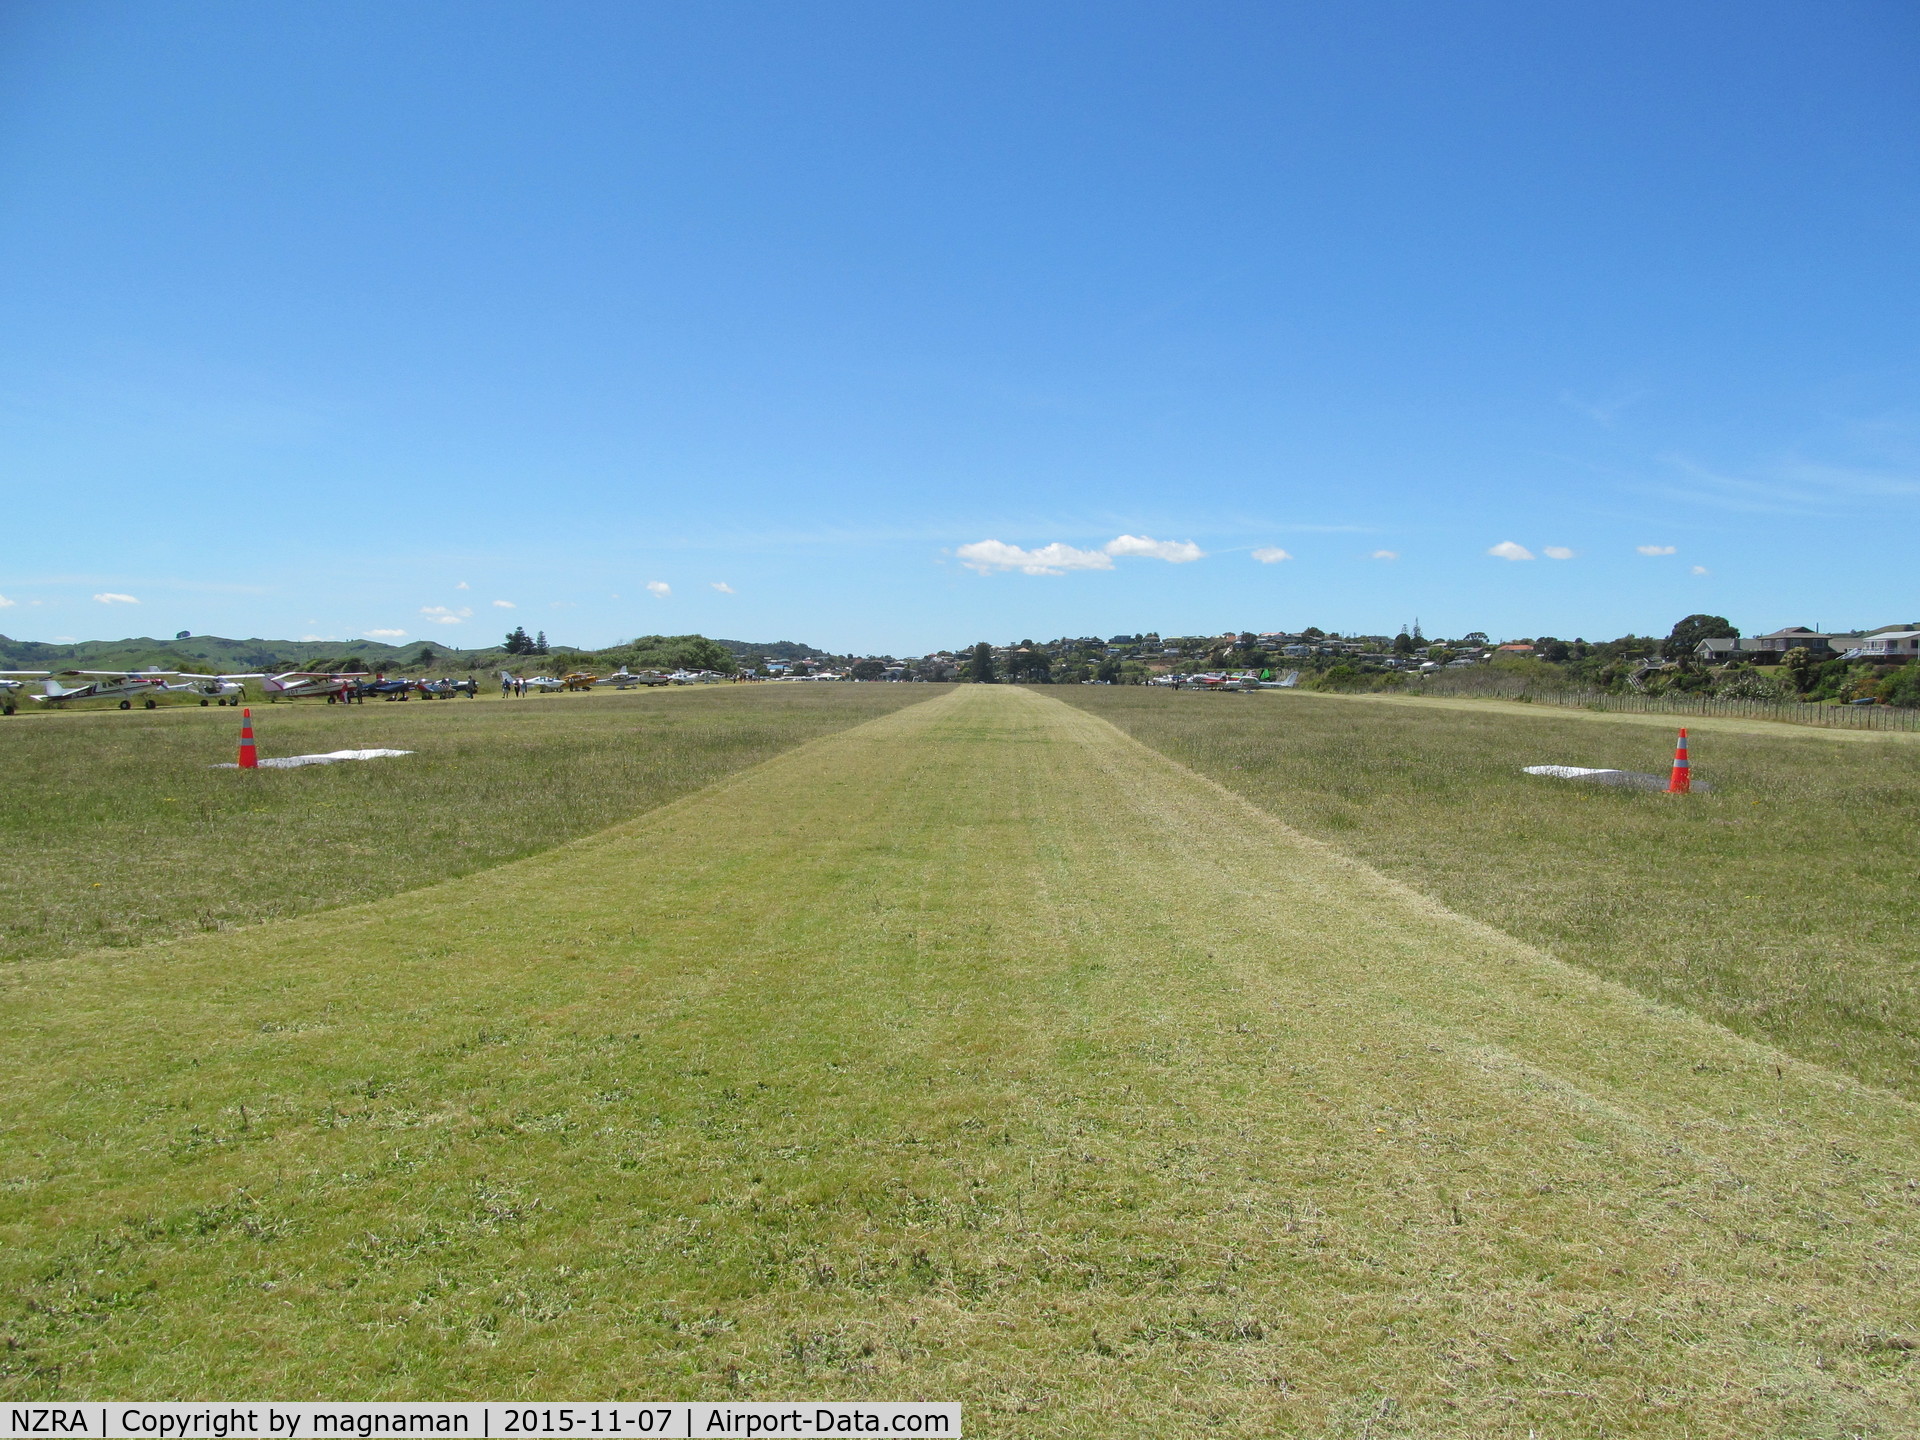 Raglan Aerodrome Airport, Raglan New Zealand (NZRA) - at runway threshold